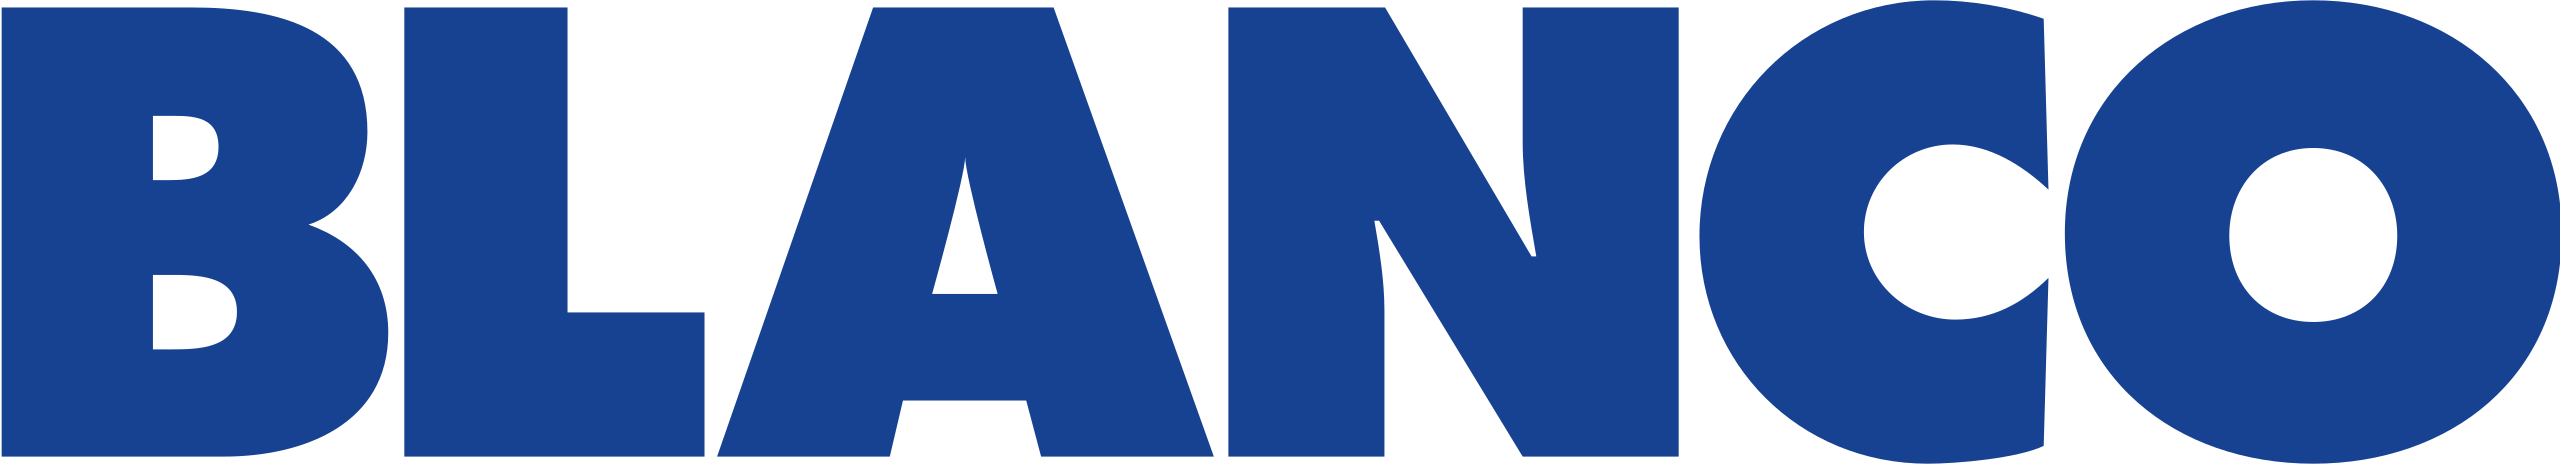 blanko logo